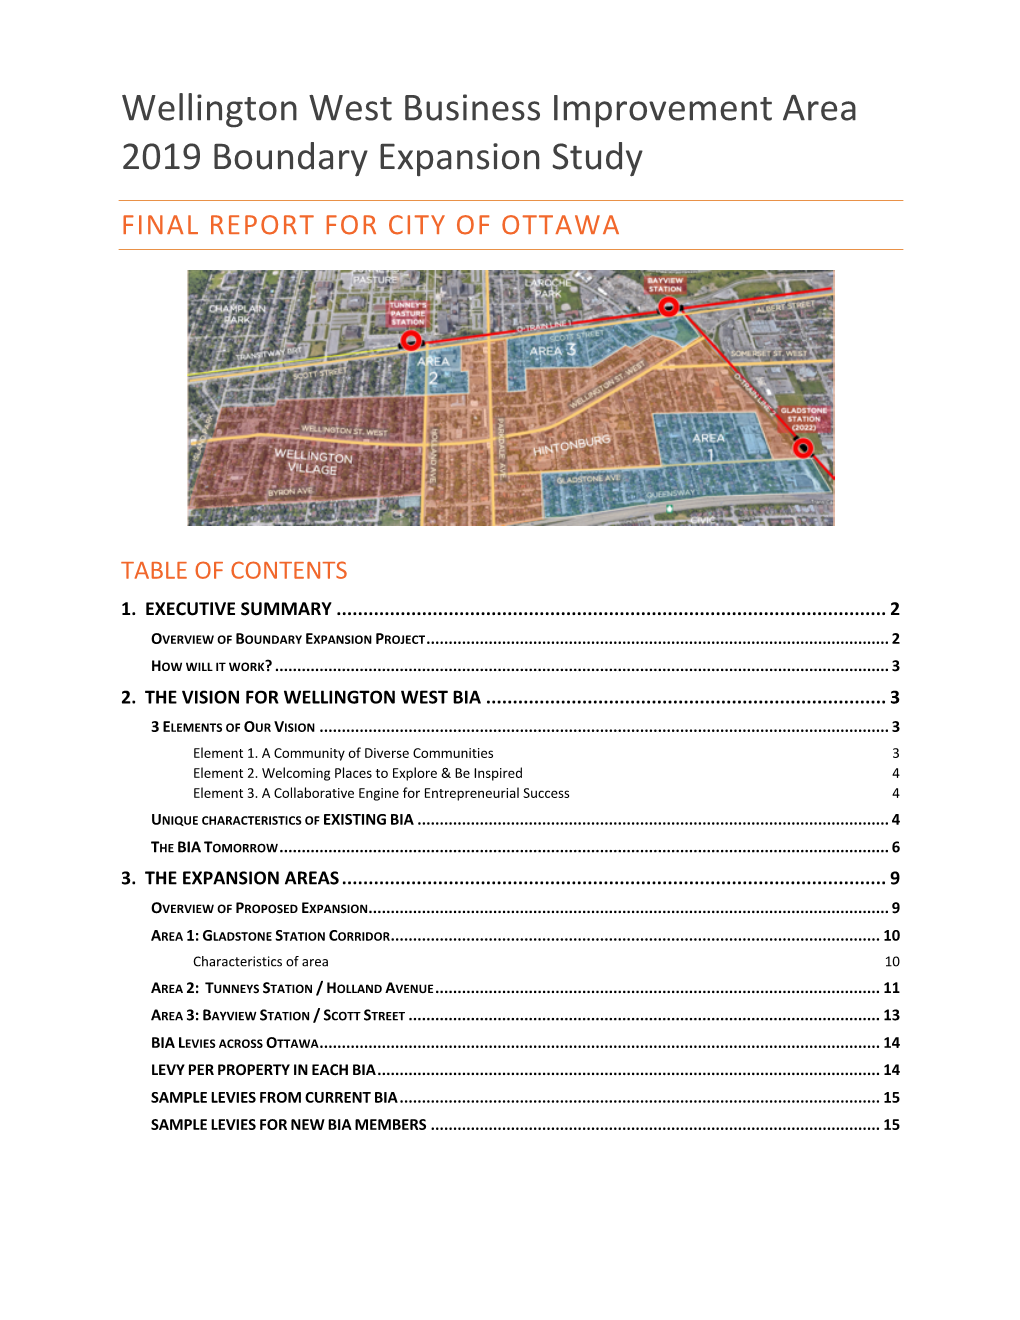 Wellington West Business Improvement Area 2019 Boundary Expansion Study